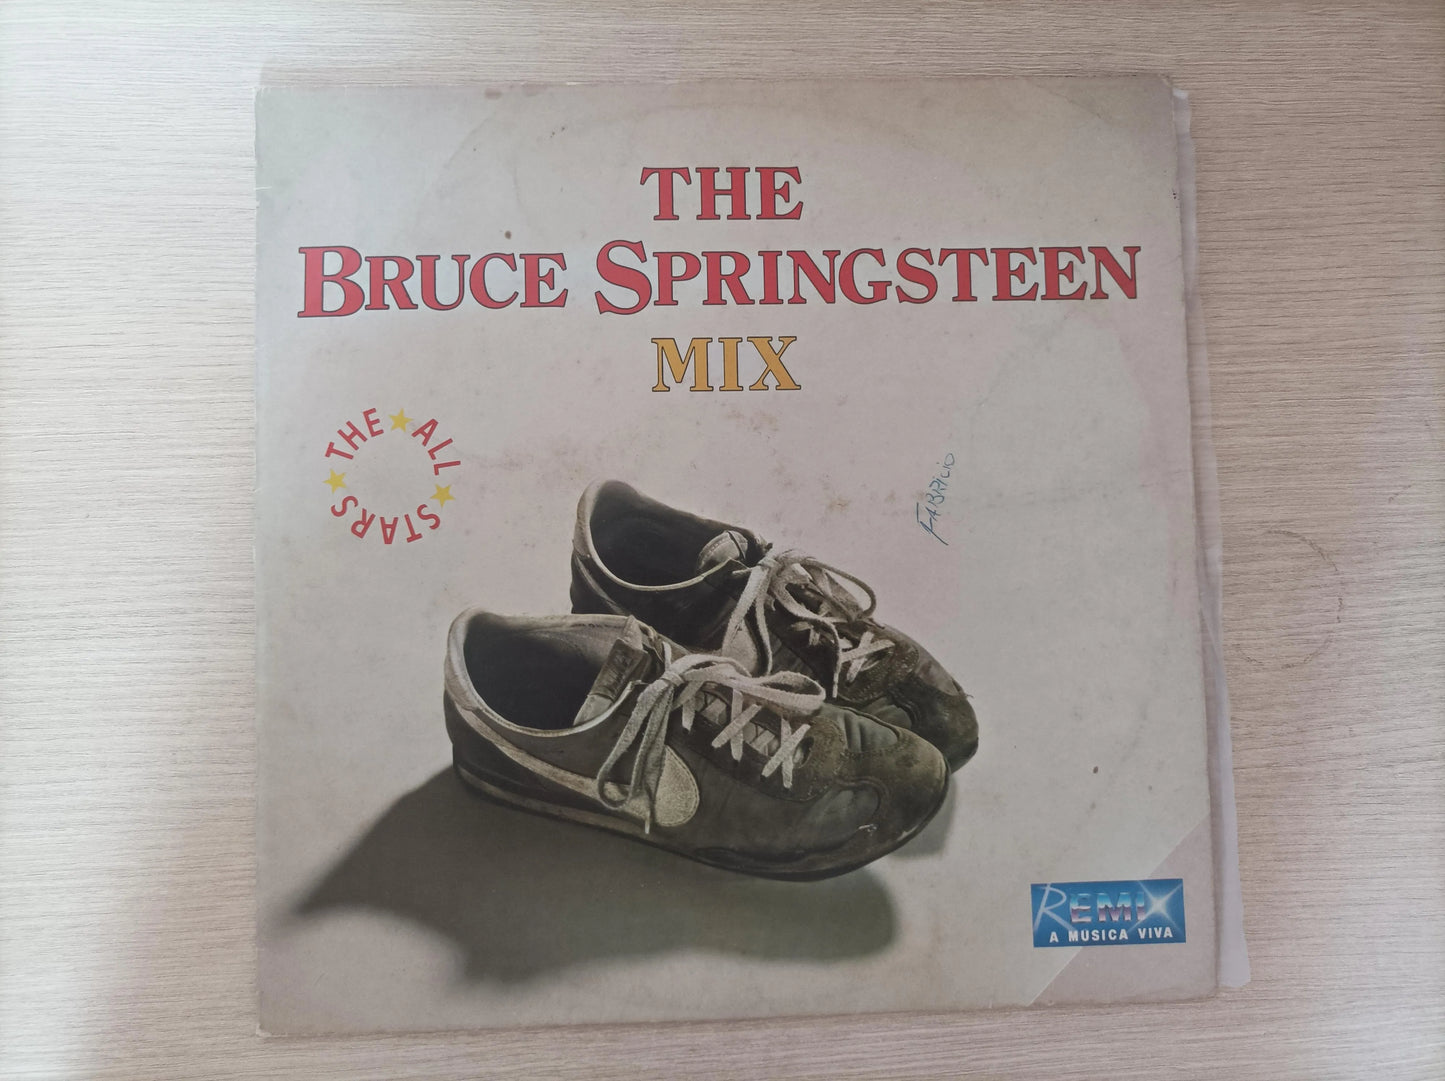 Lp Vinil Bruce Springsteen Mix The All Stars